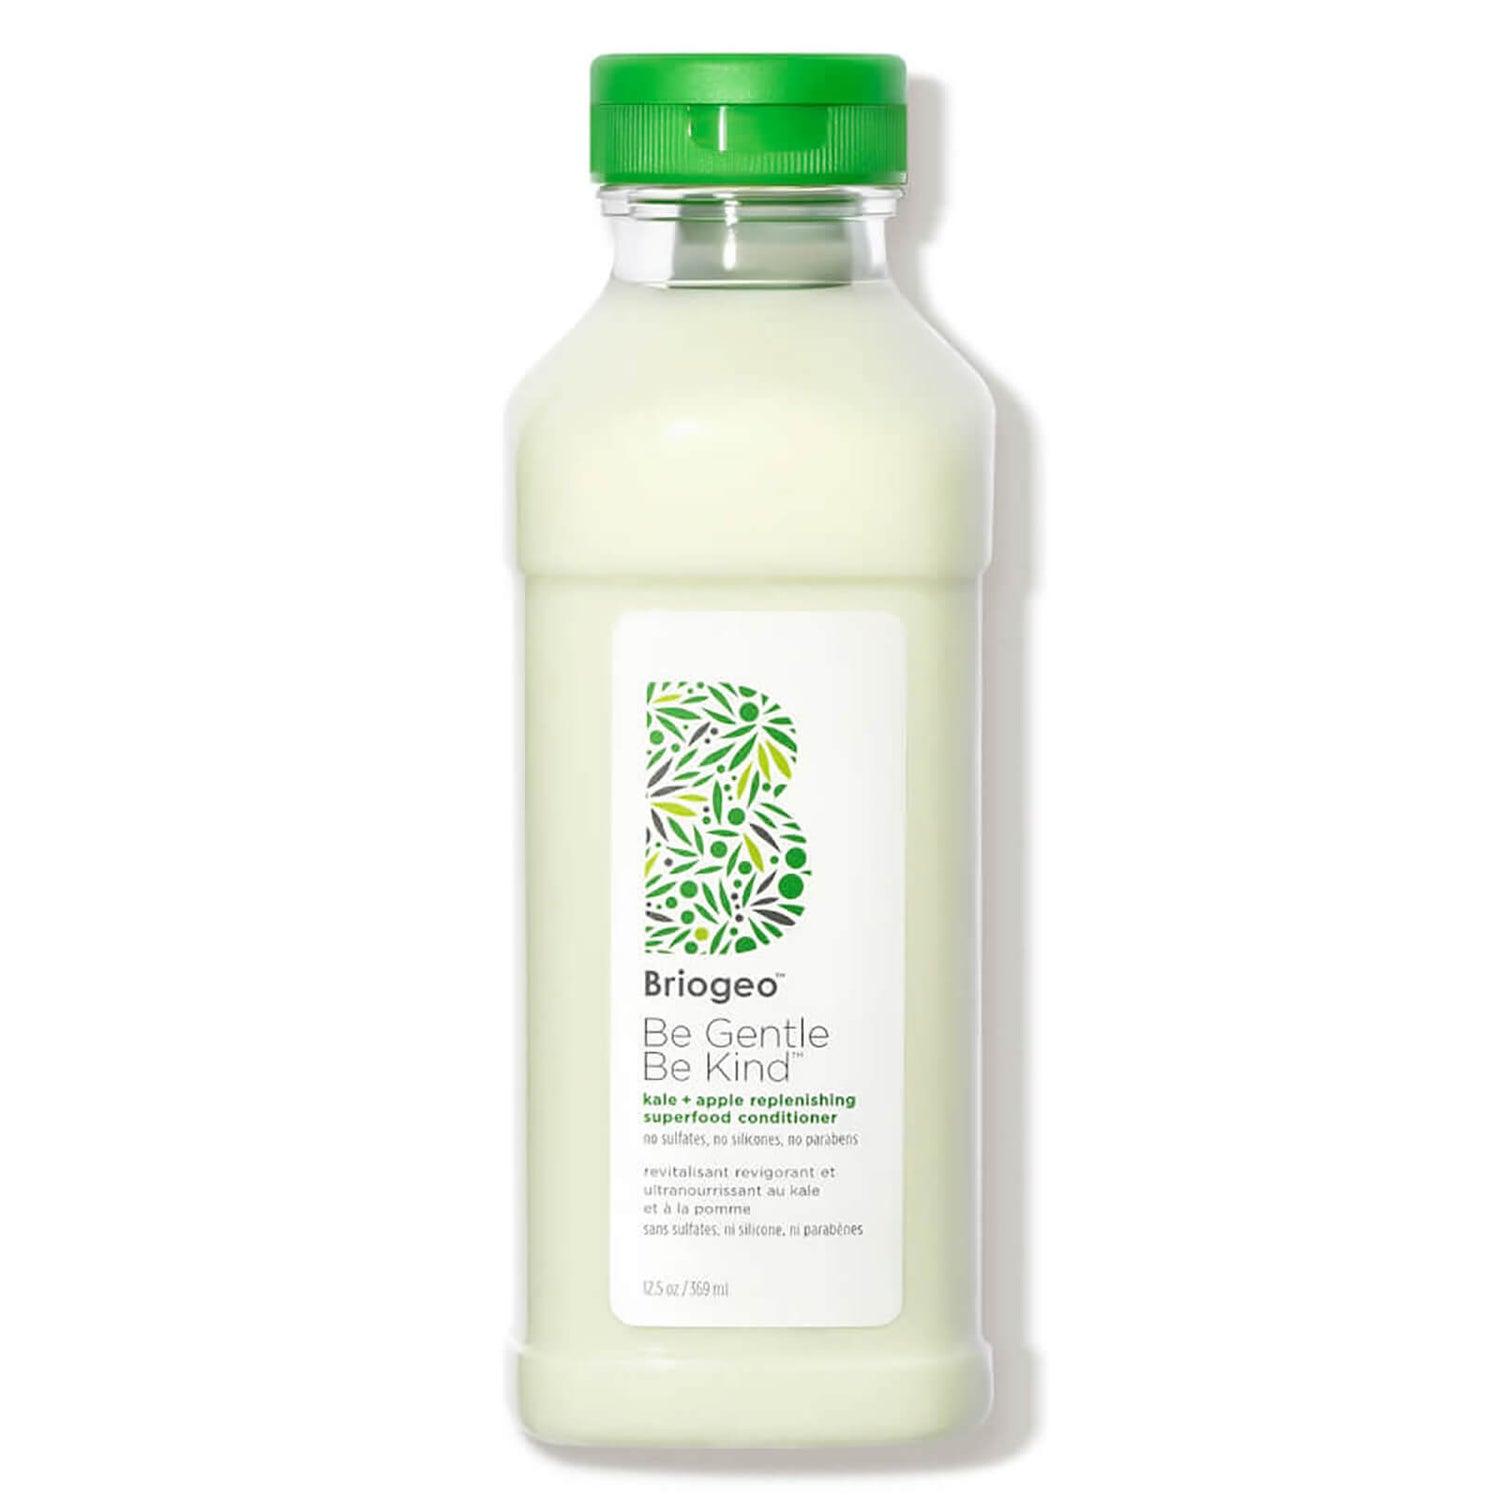 Briogeo Be Gentle Be Kind Kale Apple Replenishing Superfood Conditioner (12.5 oz.)